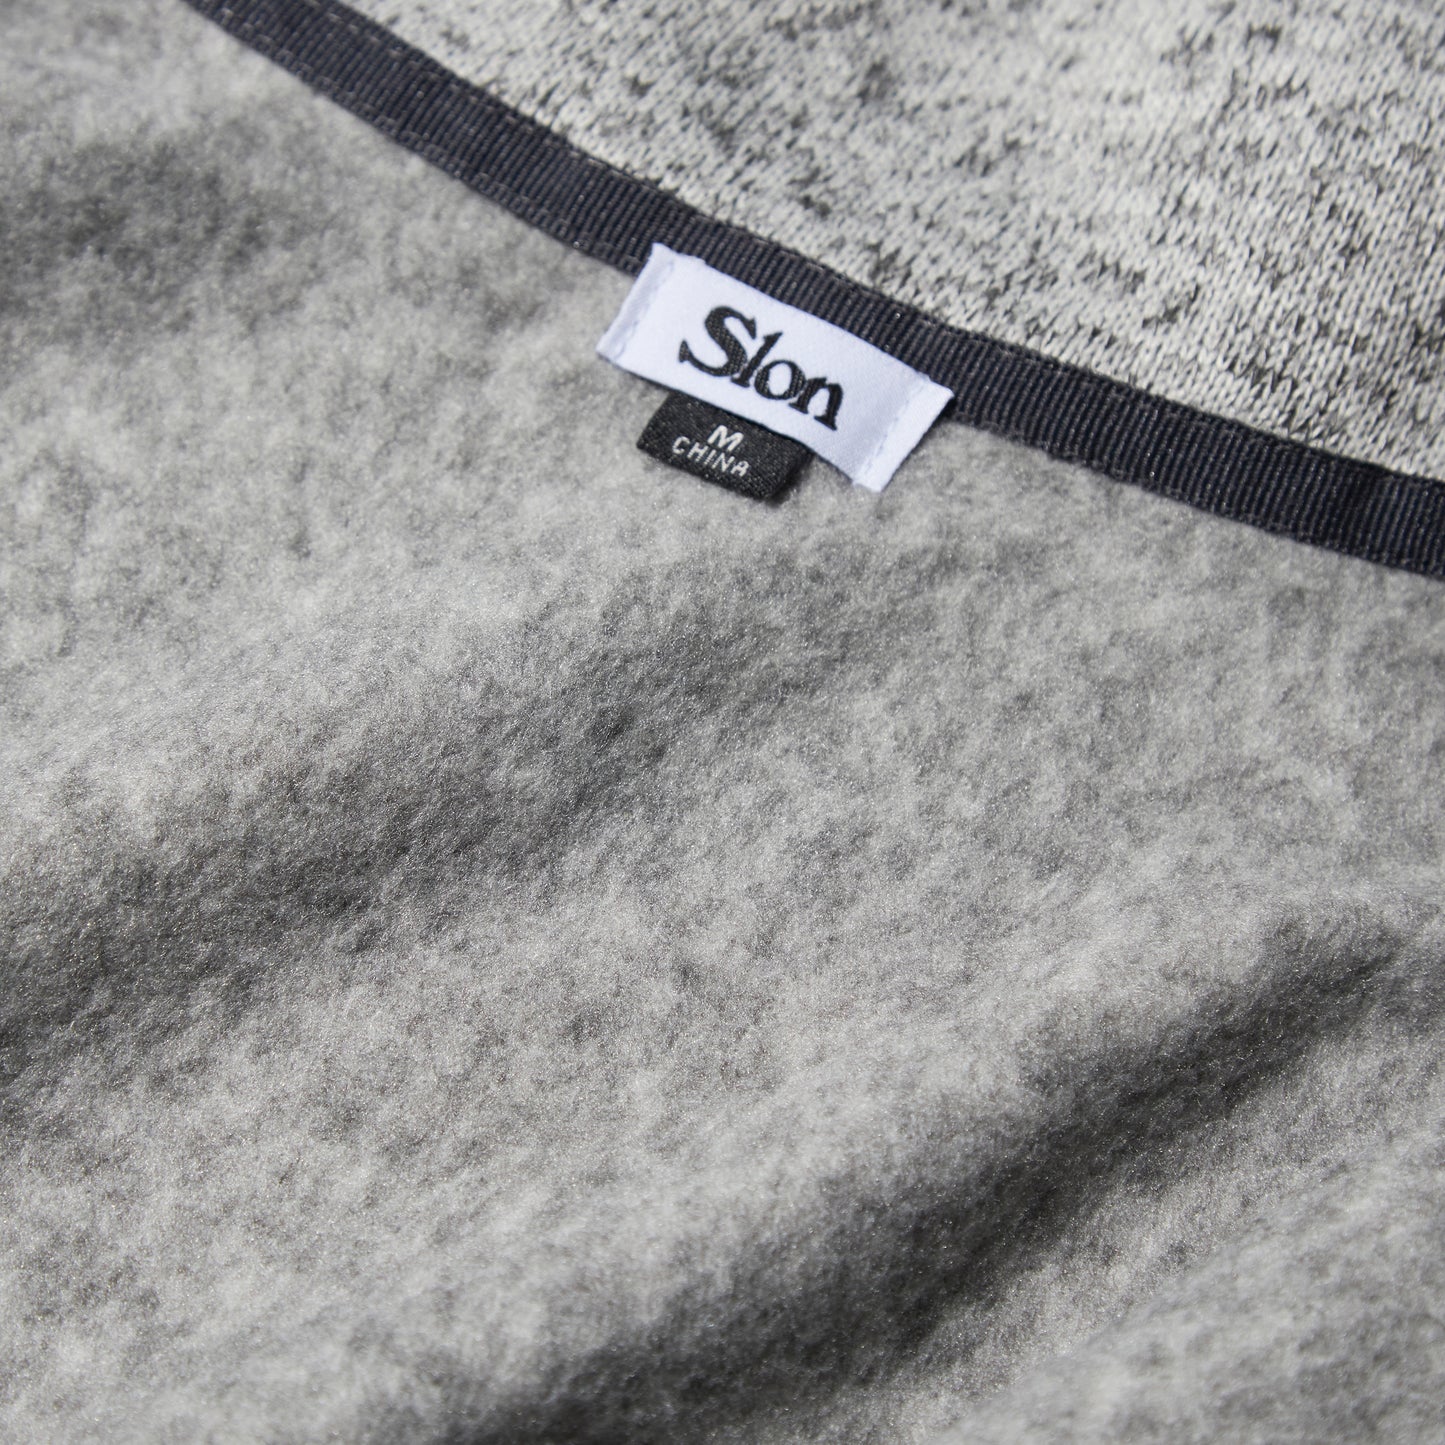 SLON Tech Logo Knit Fleece Vest "Grey Heather"